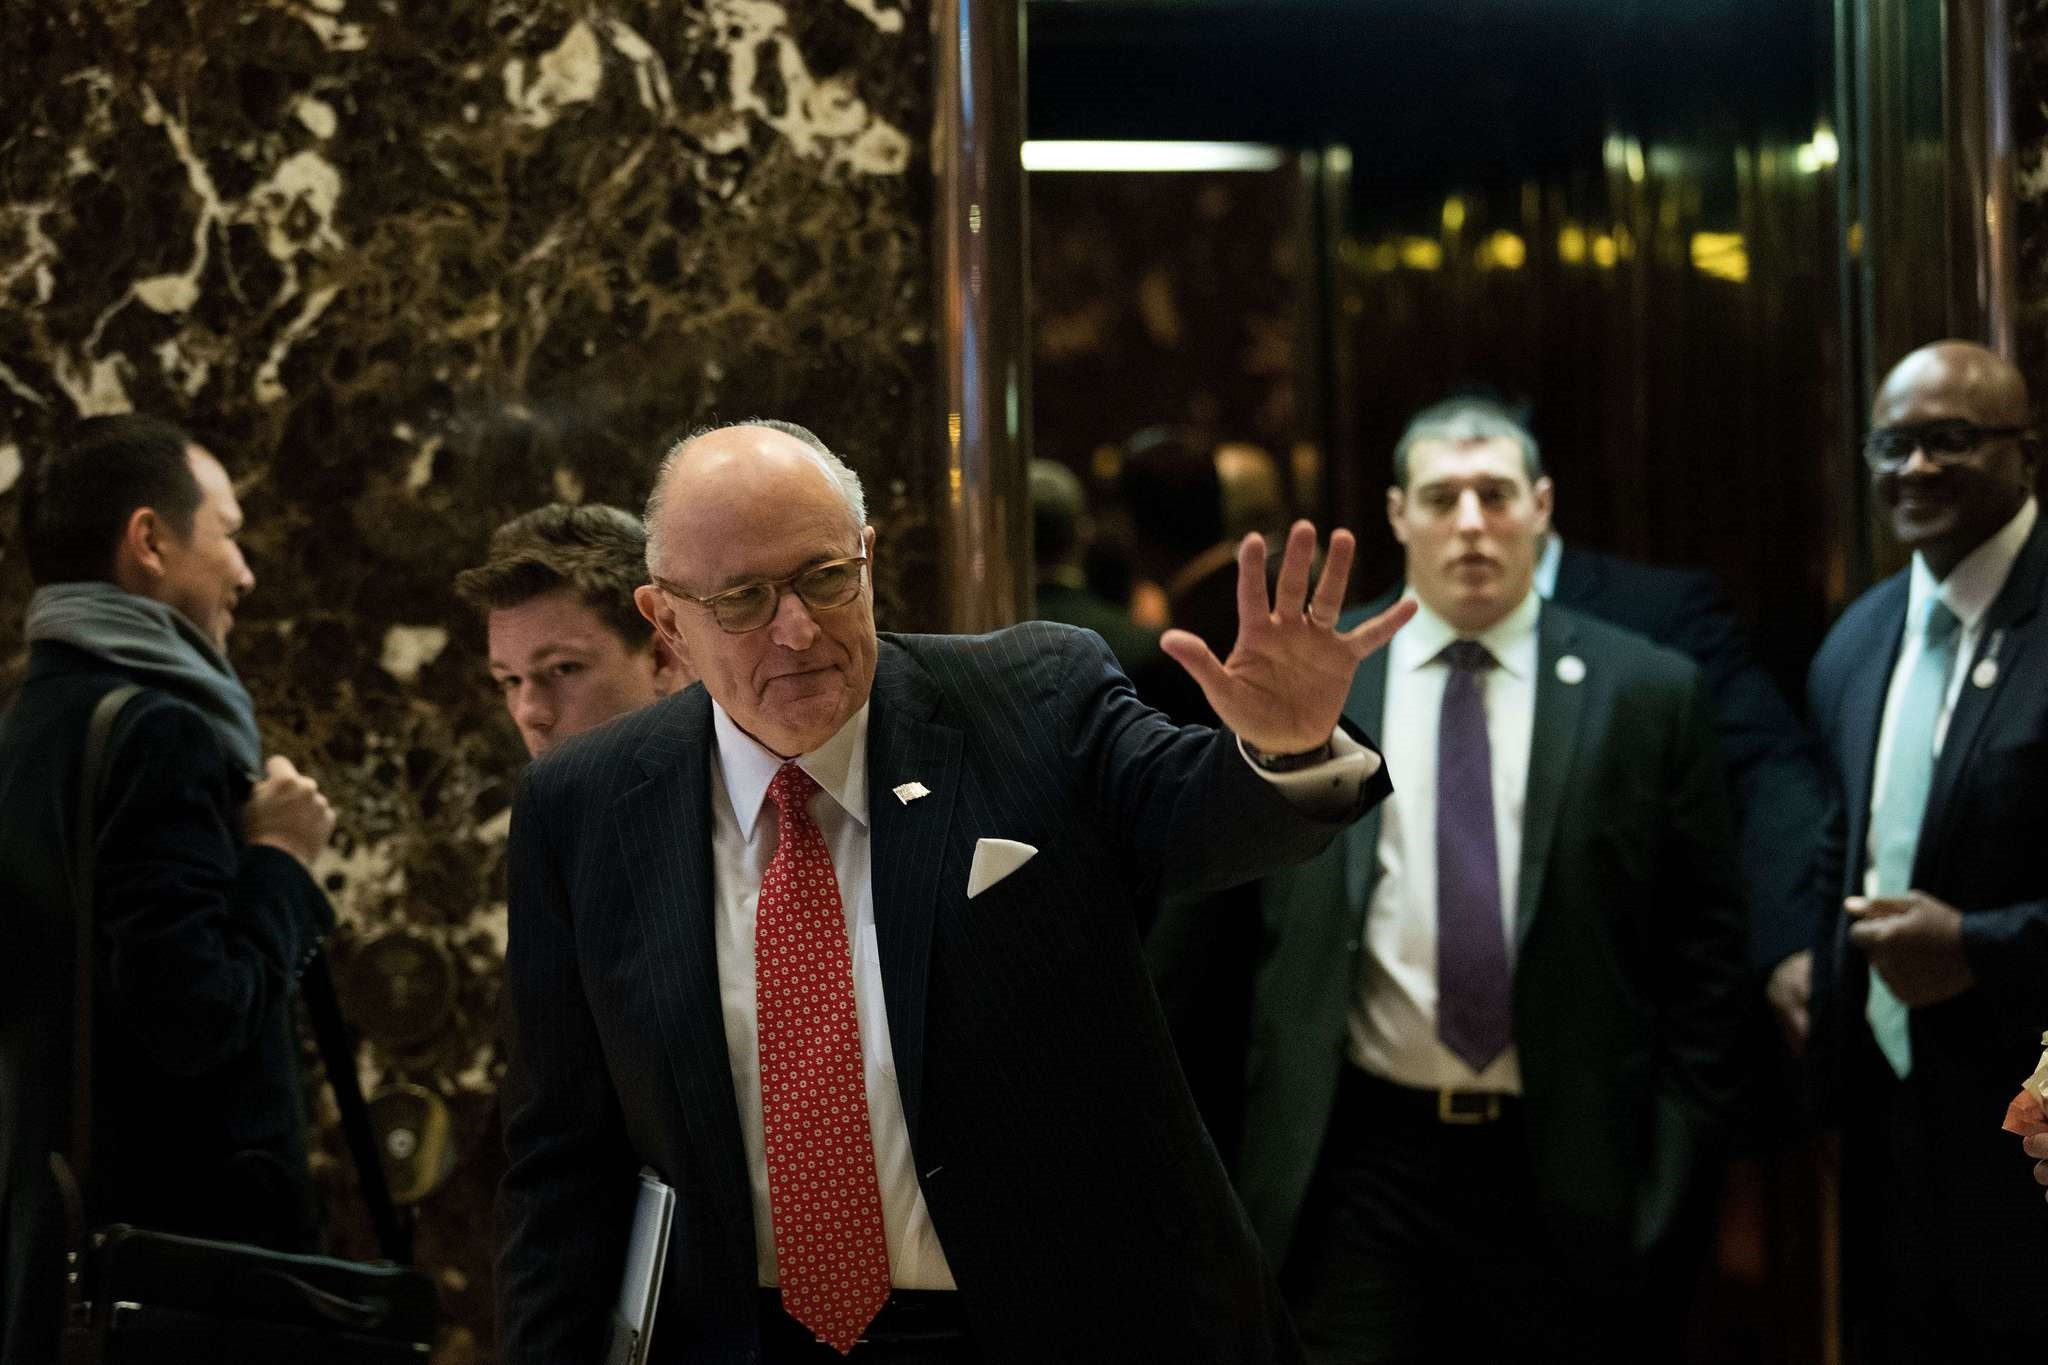 Former New York City mayor Rudy Giuliani waves as he leaves Trump Tower, November 22, 2016 in New York City. (AFP Photo)